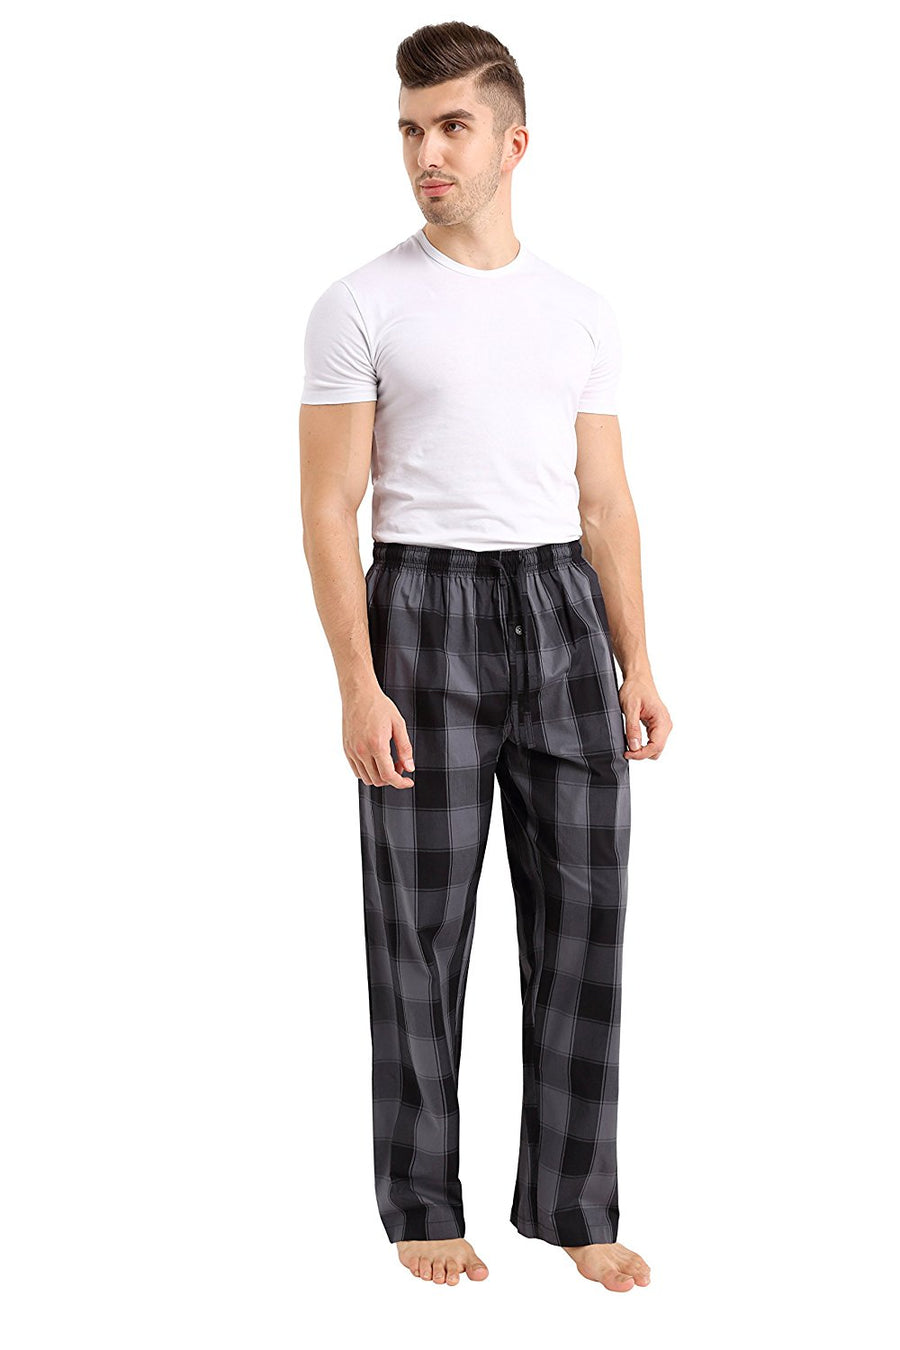 CYZ Men's 100% Cotton Poplin Pajama Lounge Sleep Pant : :  Clothing, Shoes & Accessories